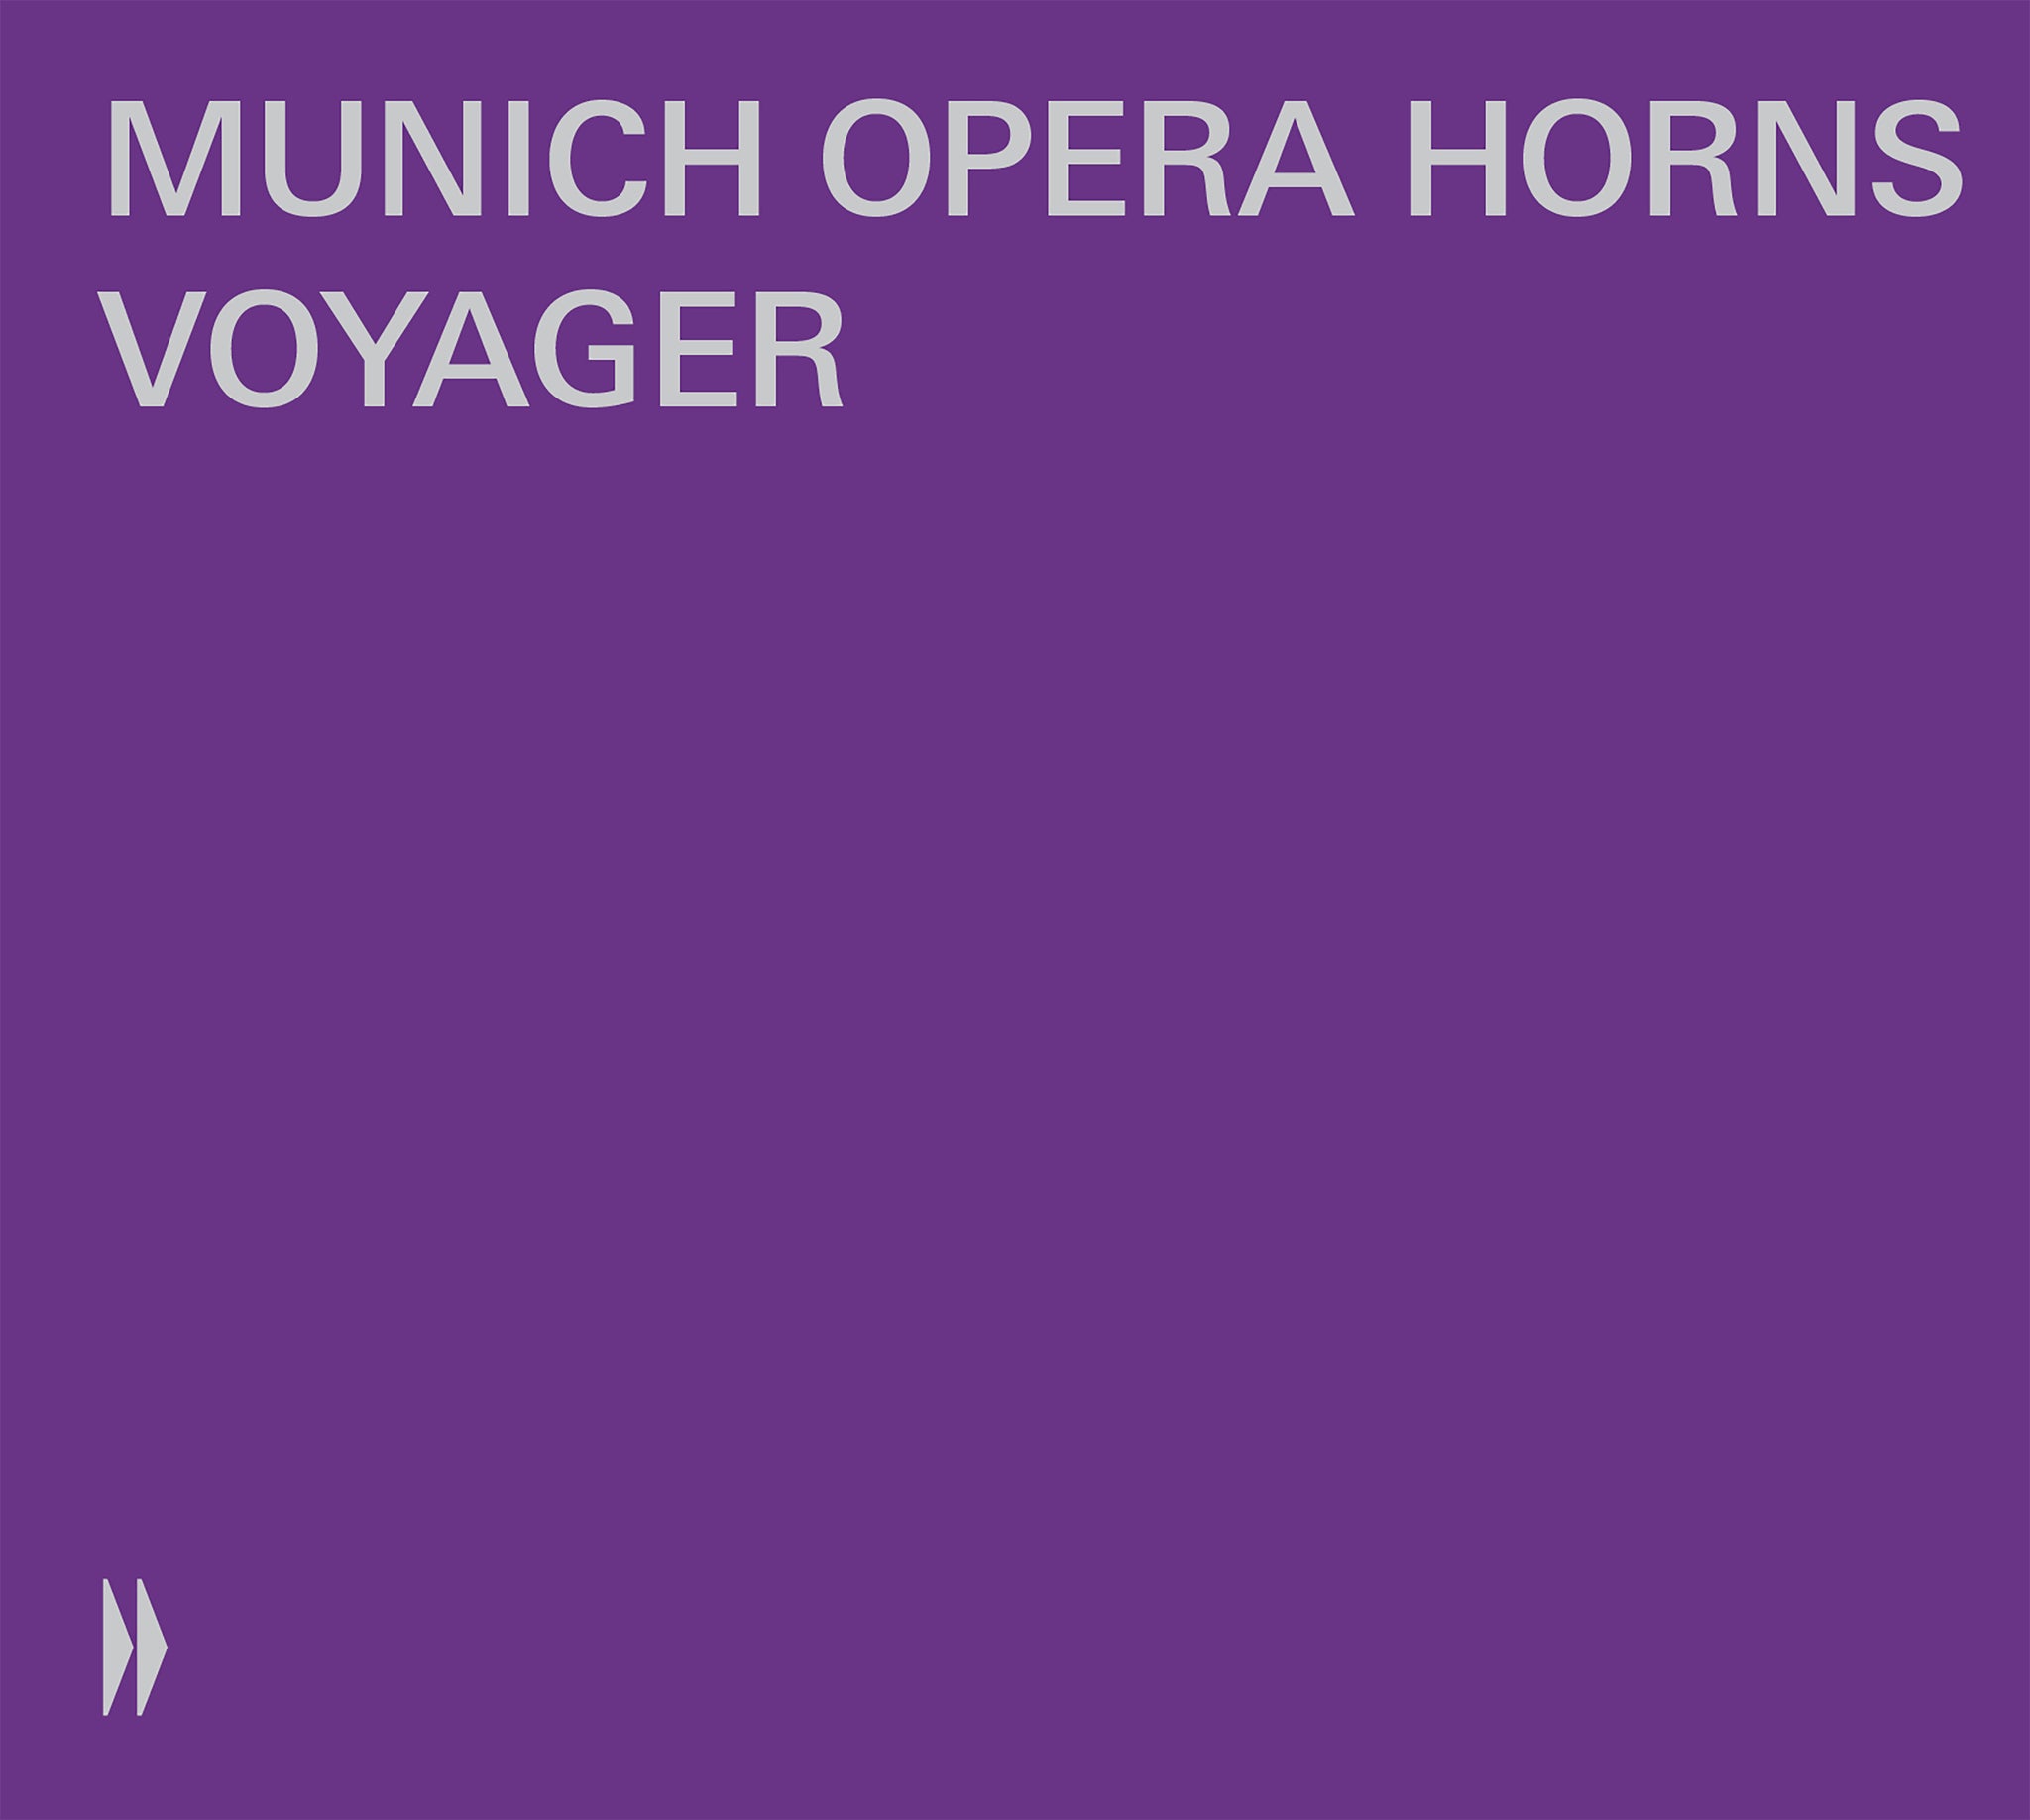 Munich Opera Orchestra Horns: Voyager